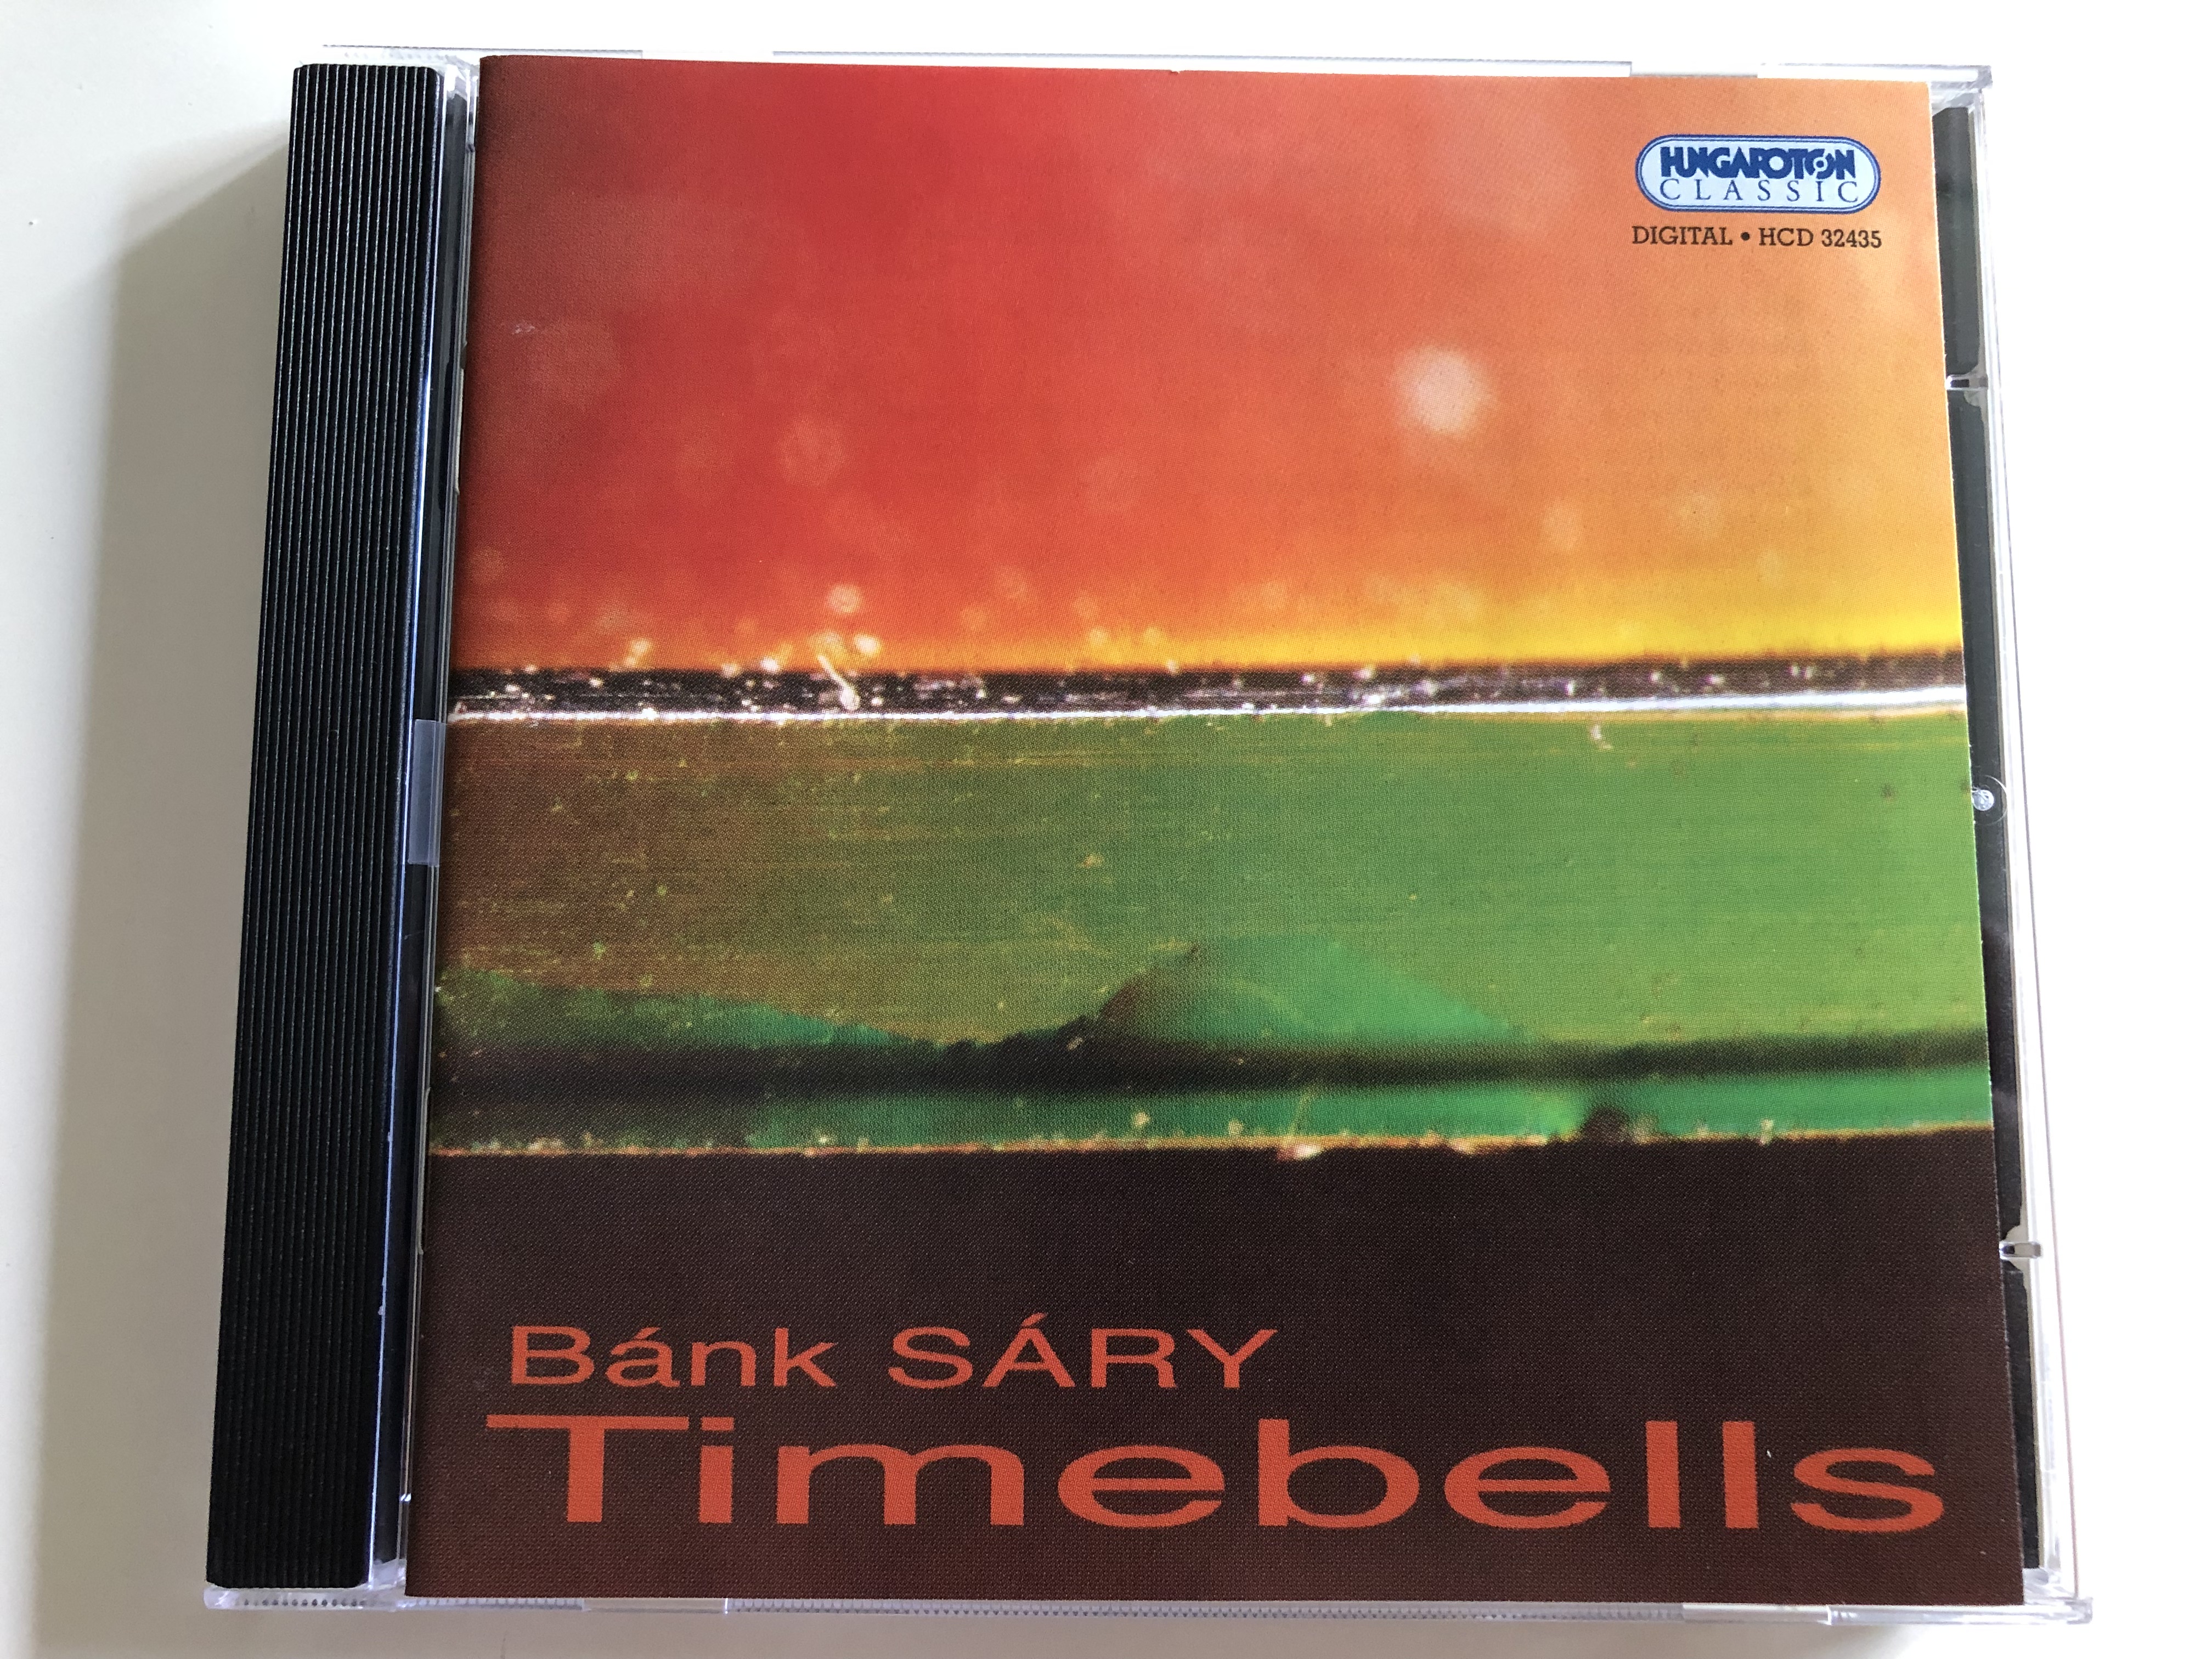 b-nk-s-ry-timebells-hungaroton-audio-cd-2006-hcd-32435-1-.jpg